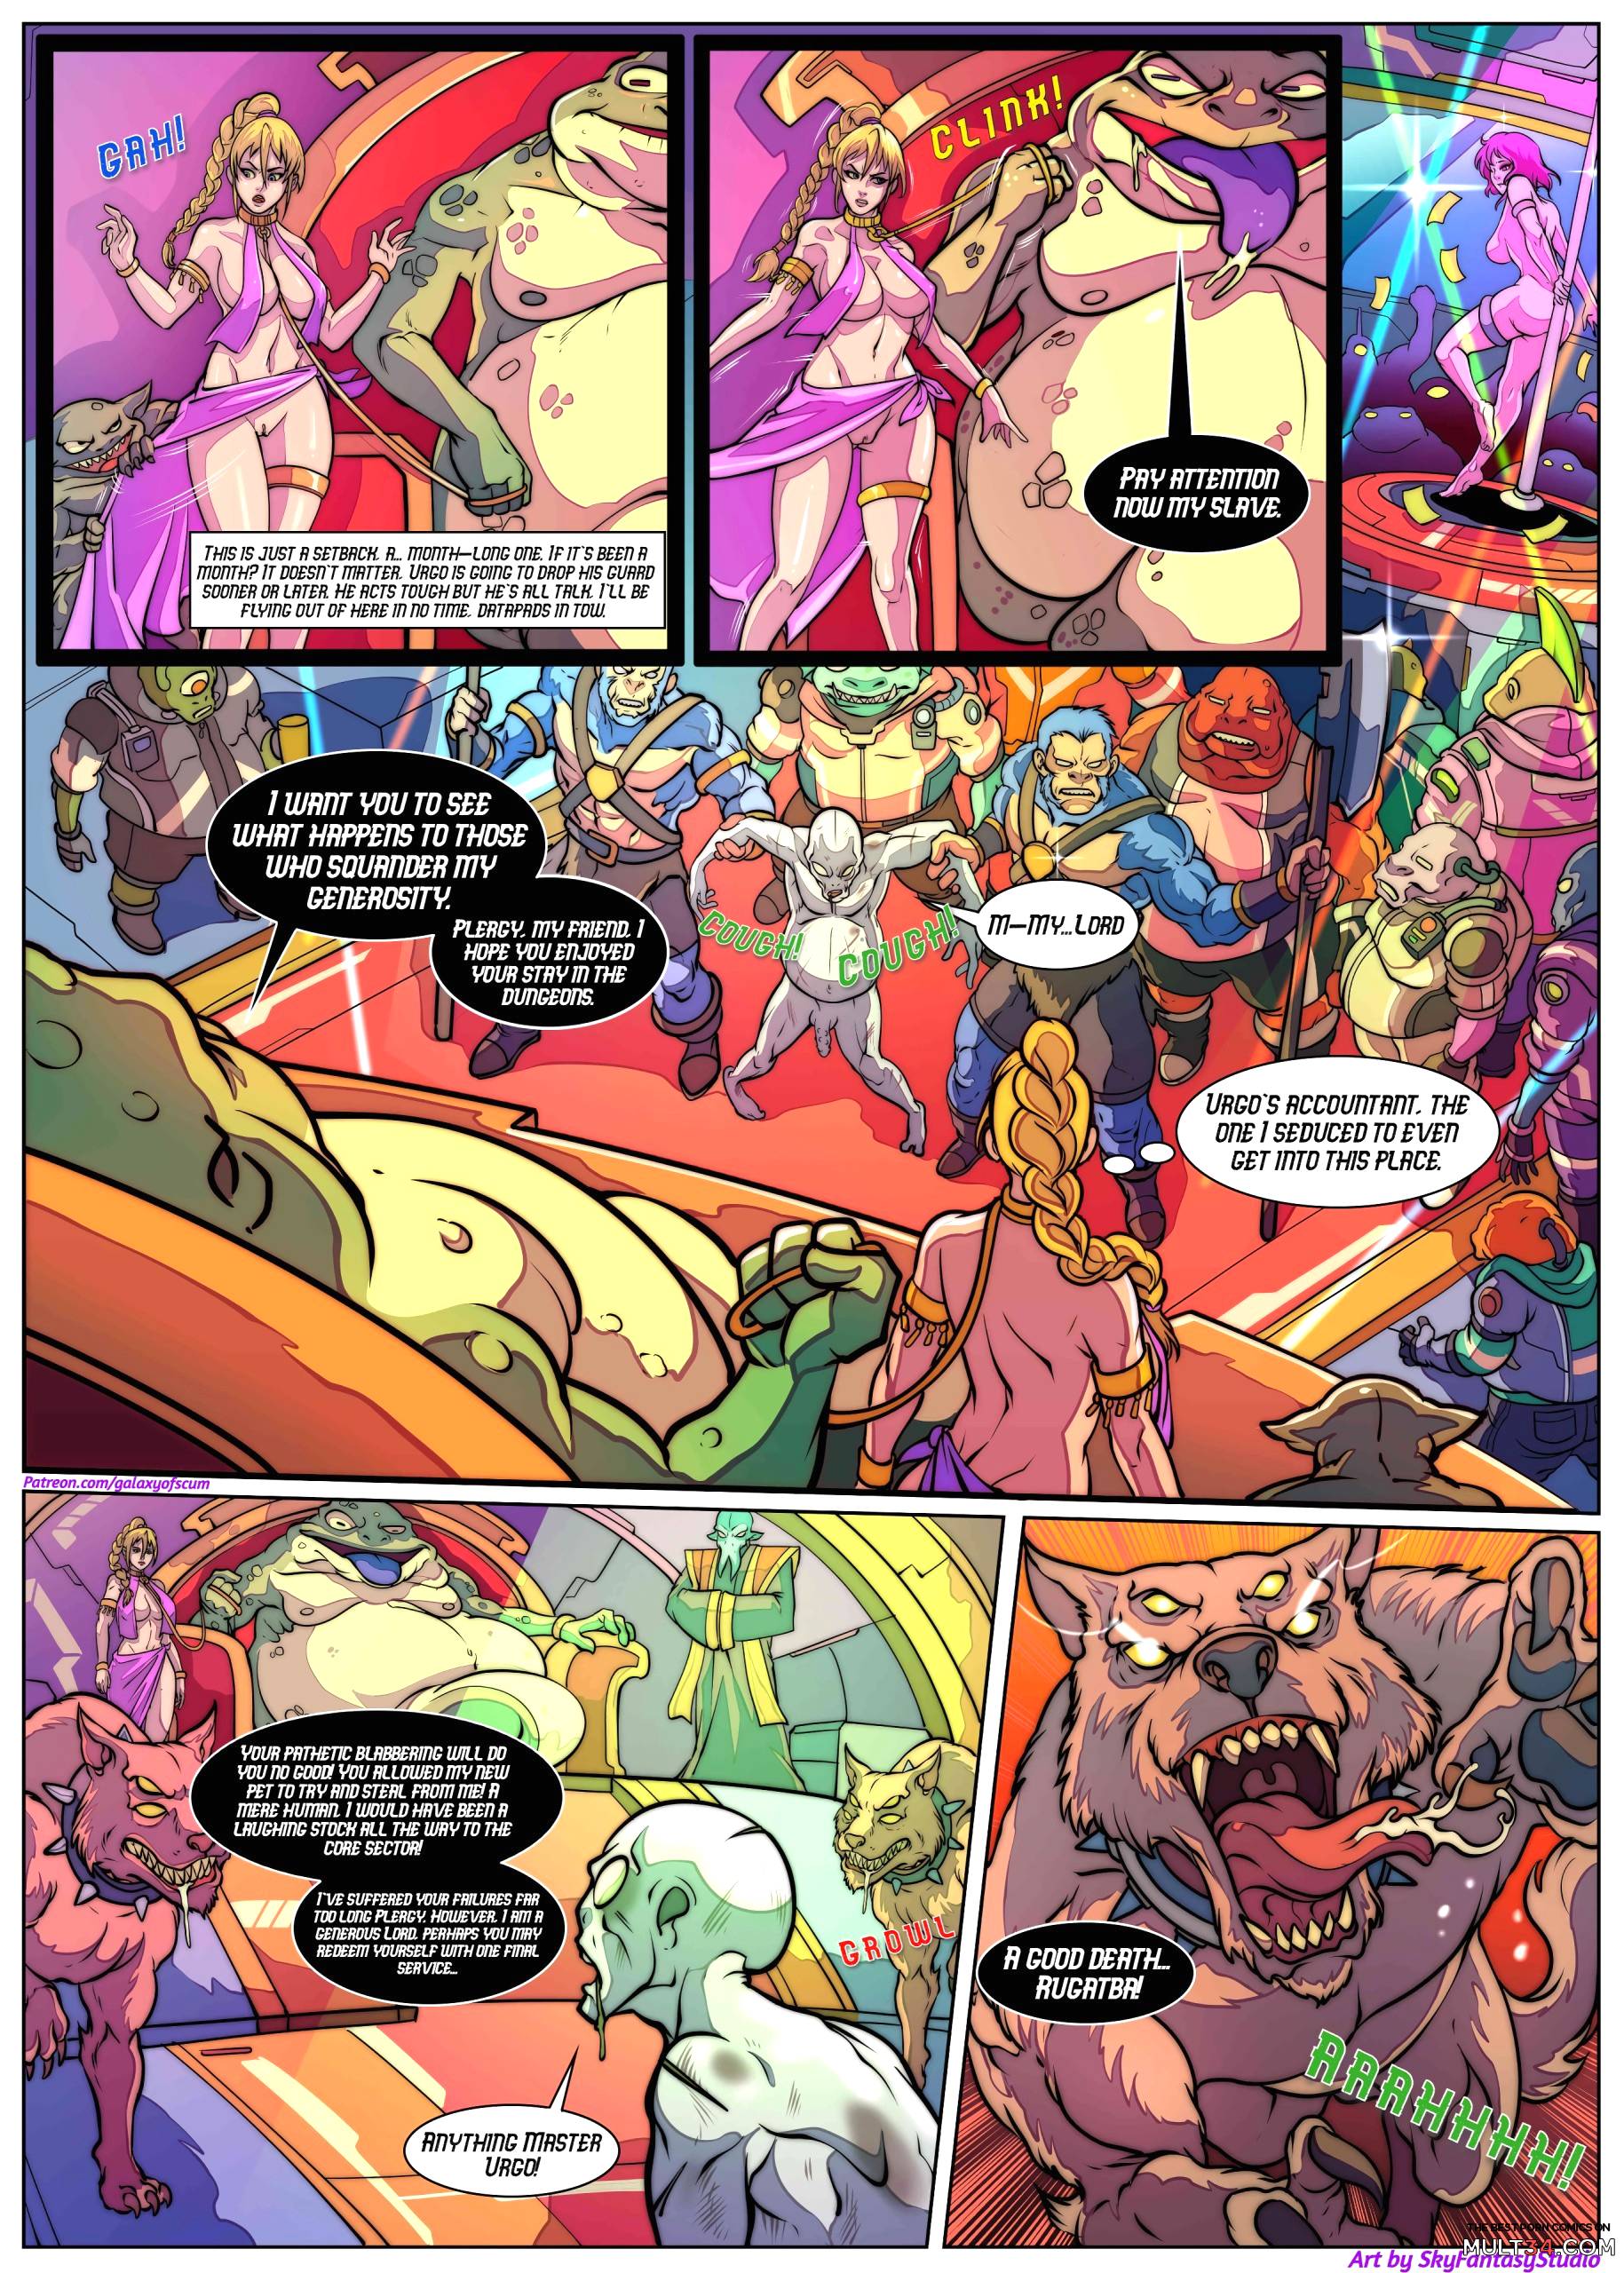 Galaxy of Scum Issue 1: Urgo's Palace page 4